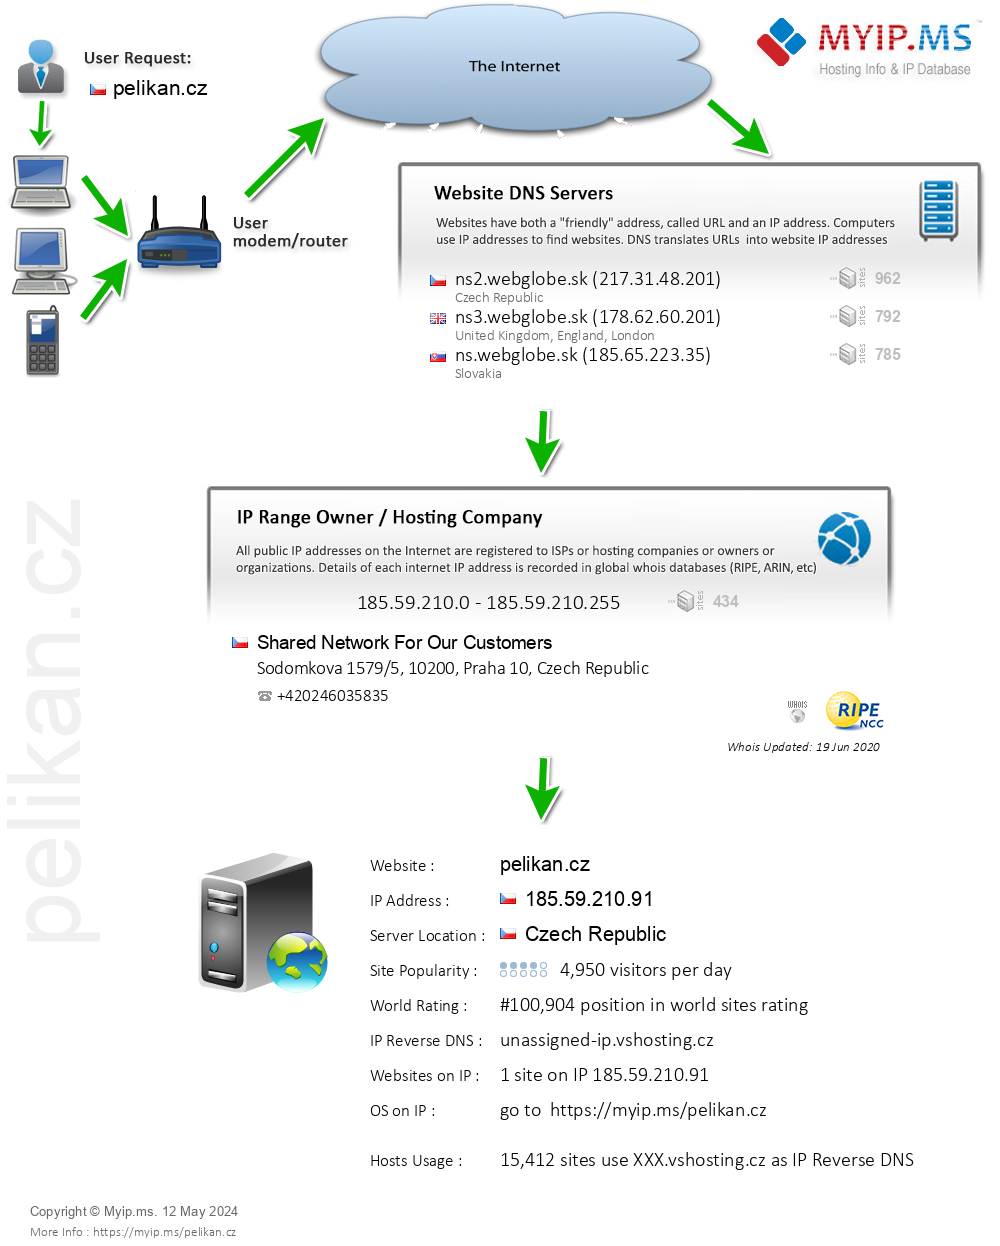 Pelikan.cz - Website Hosting Visual IP Diagram